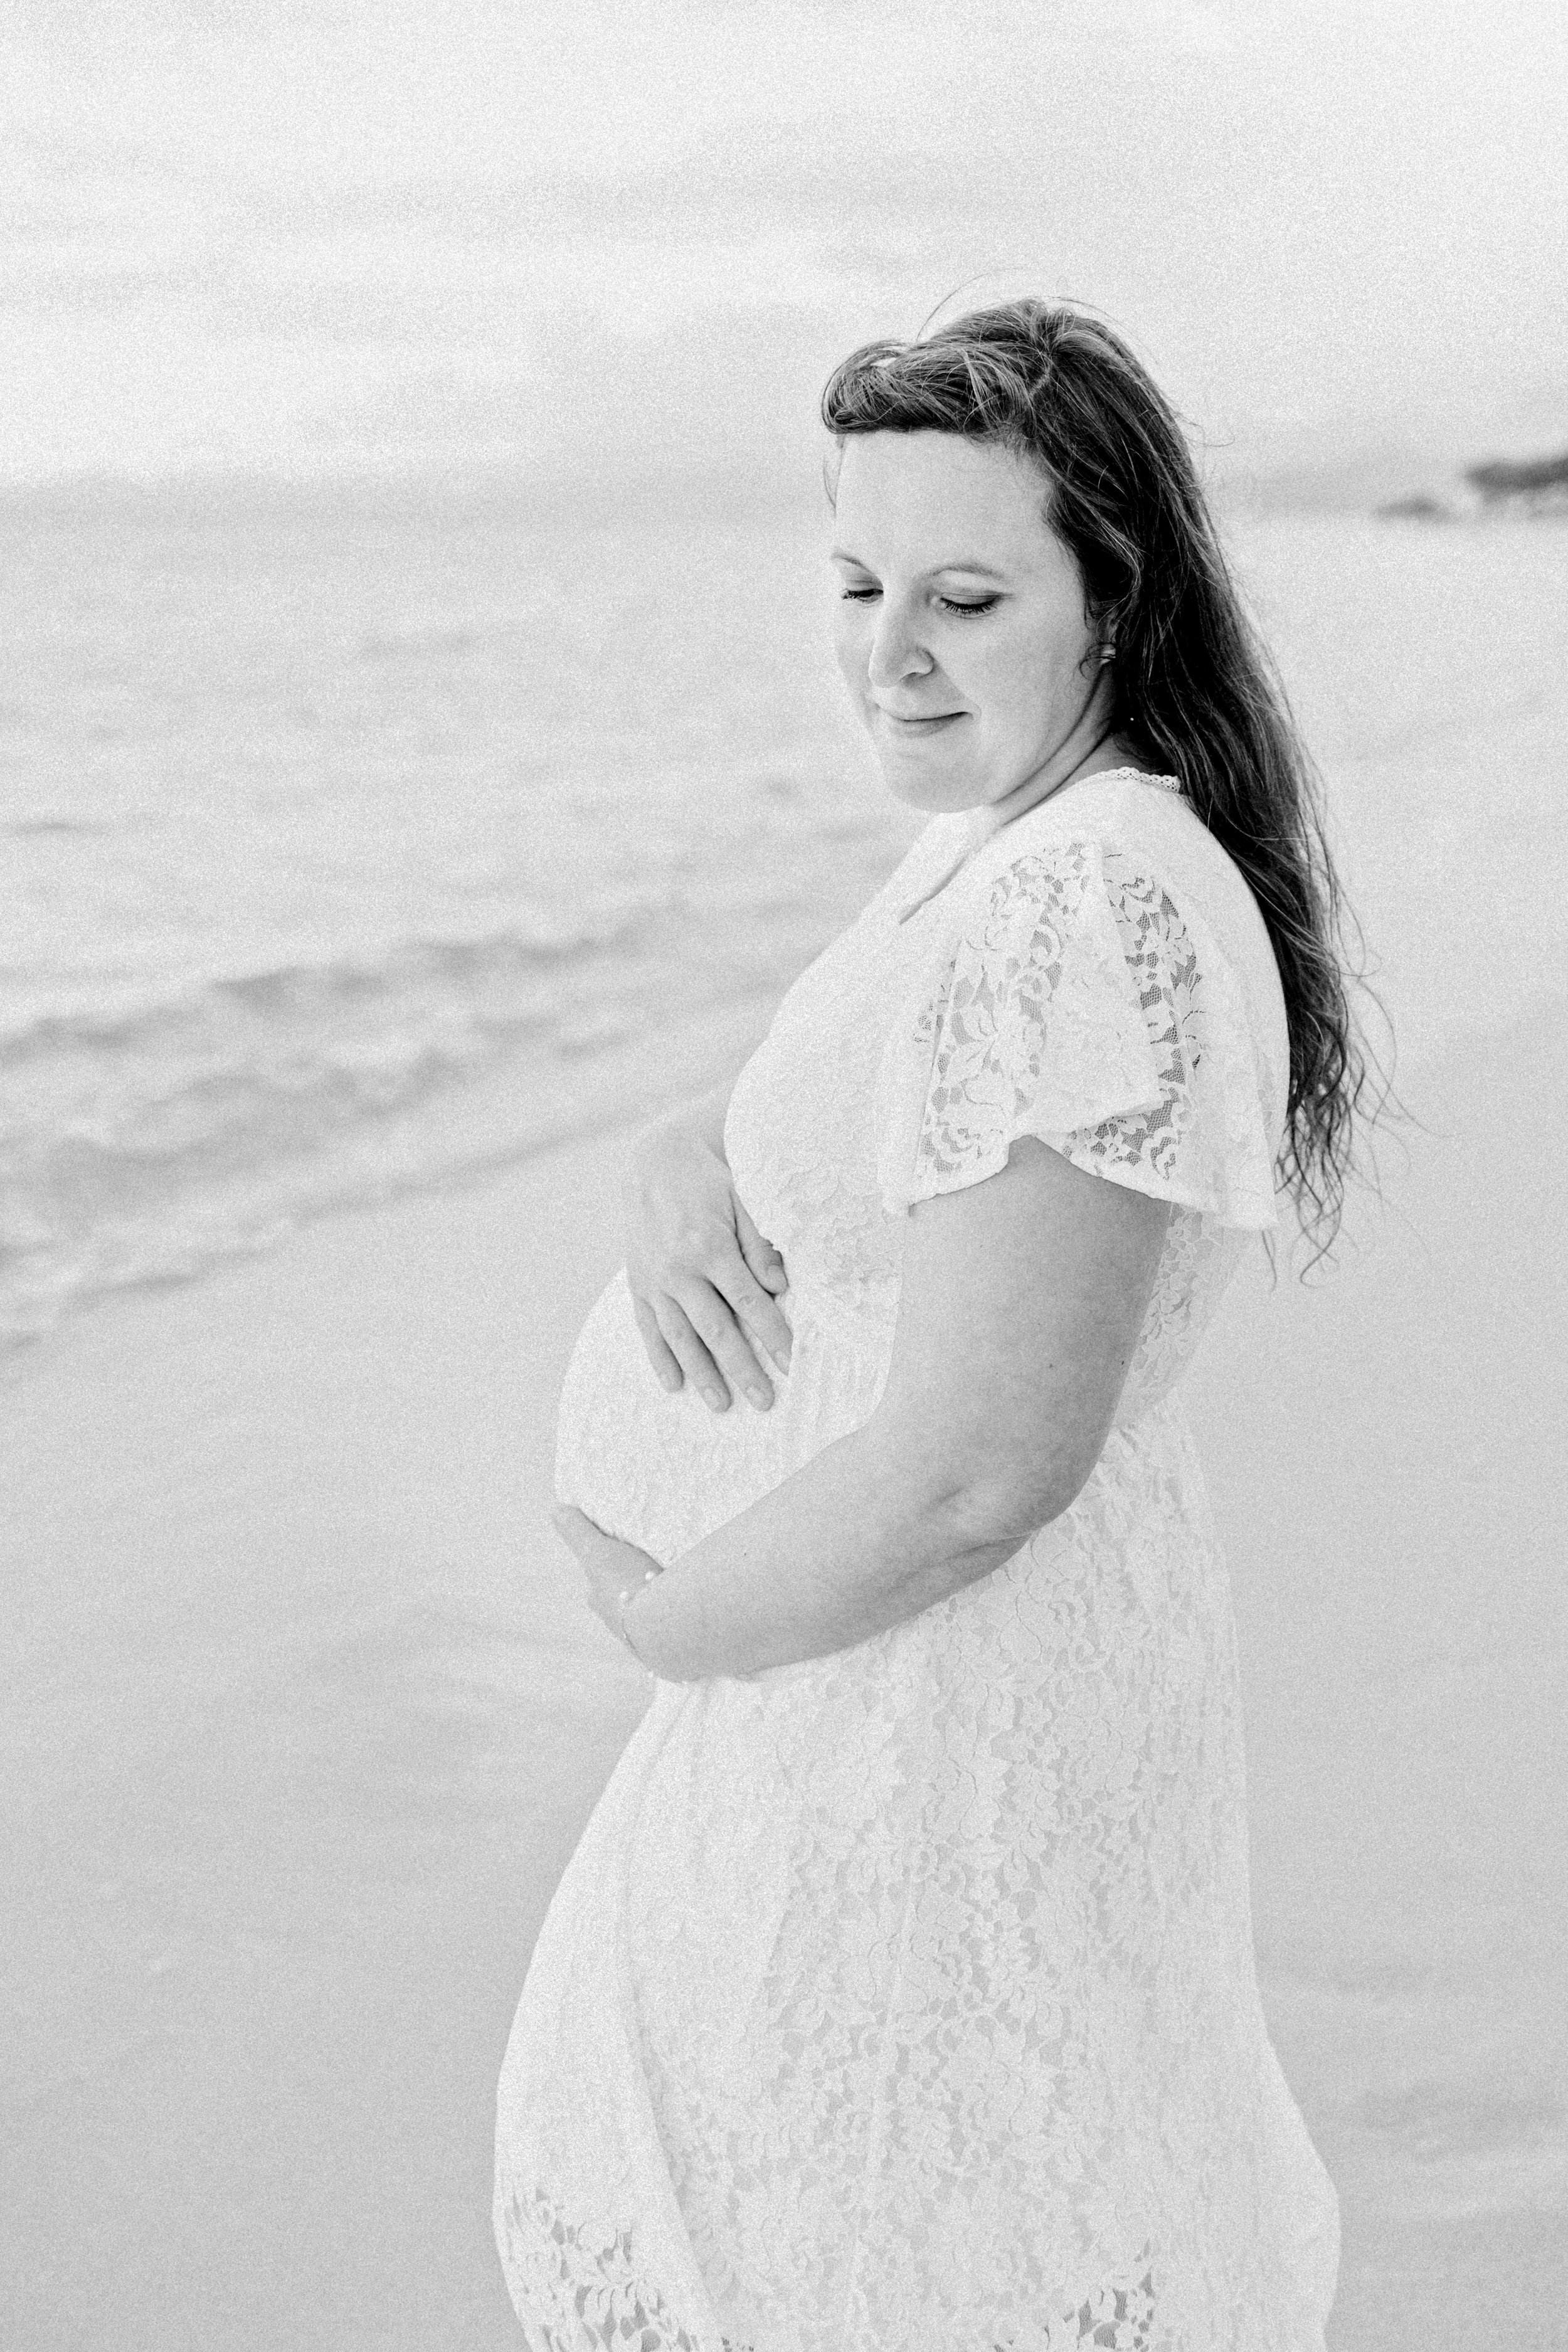 Oahu-Maternity-Photographer-Following-Seas-Photography-6309BW copy.jpg